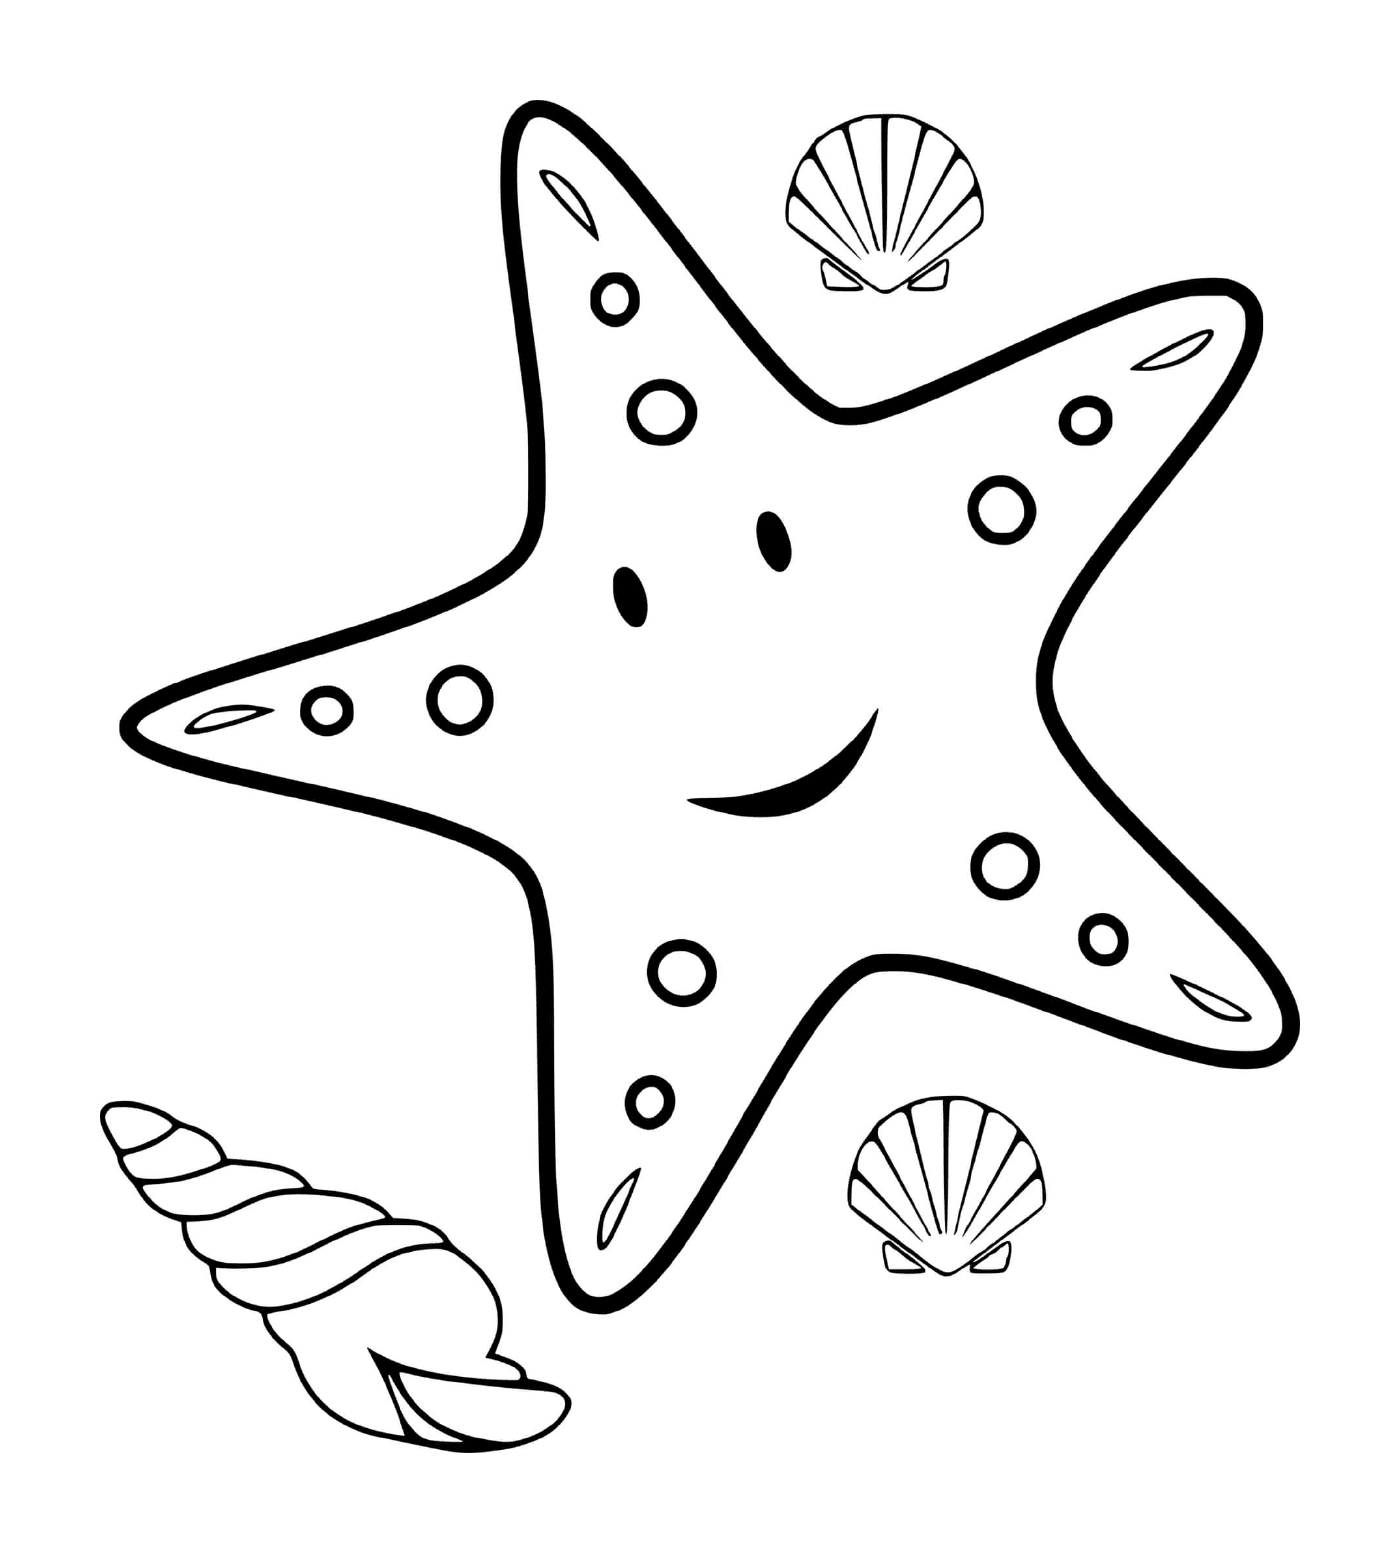  Sea star in water 